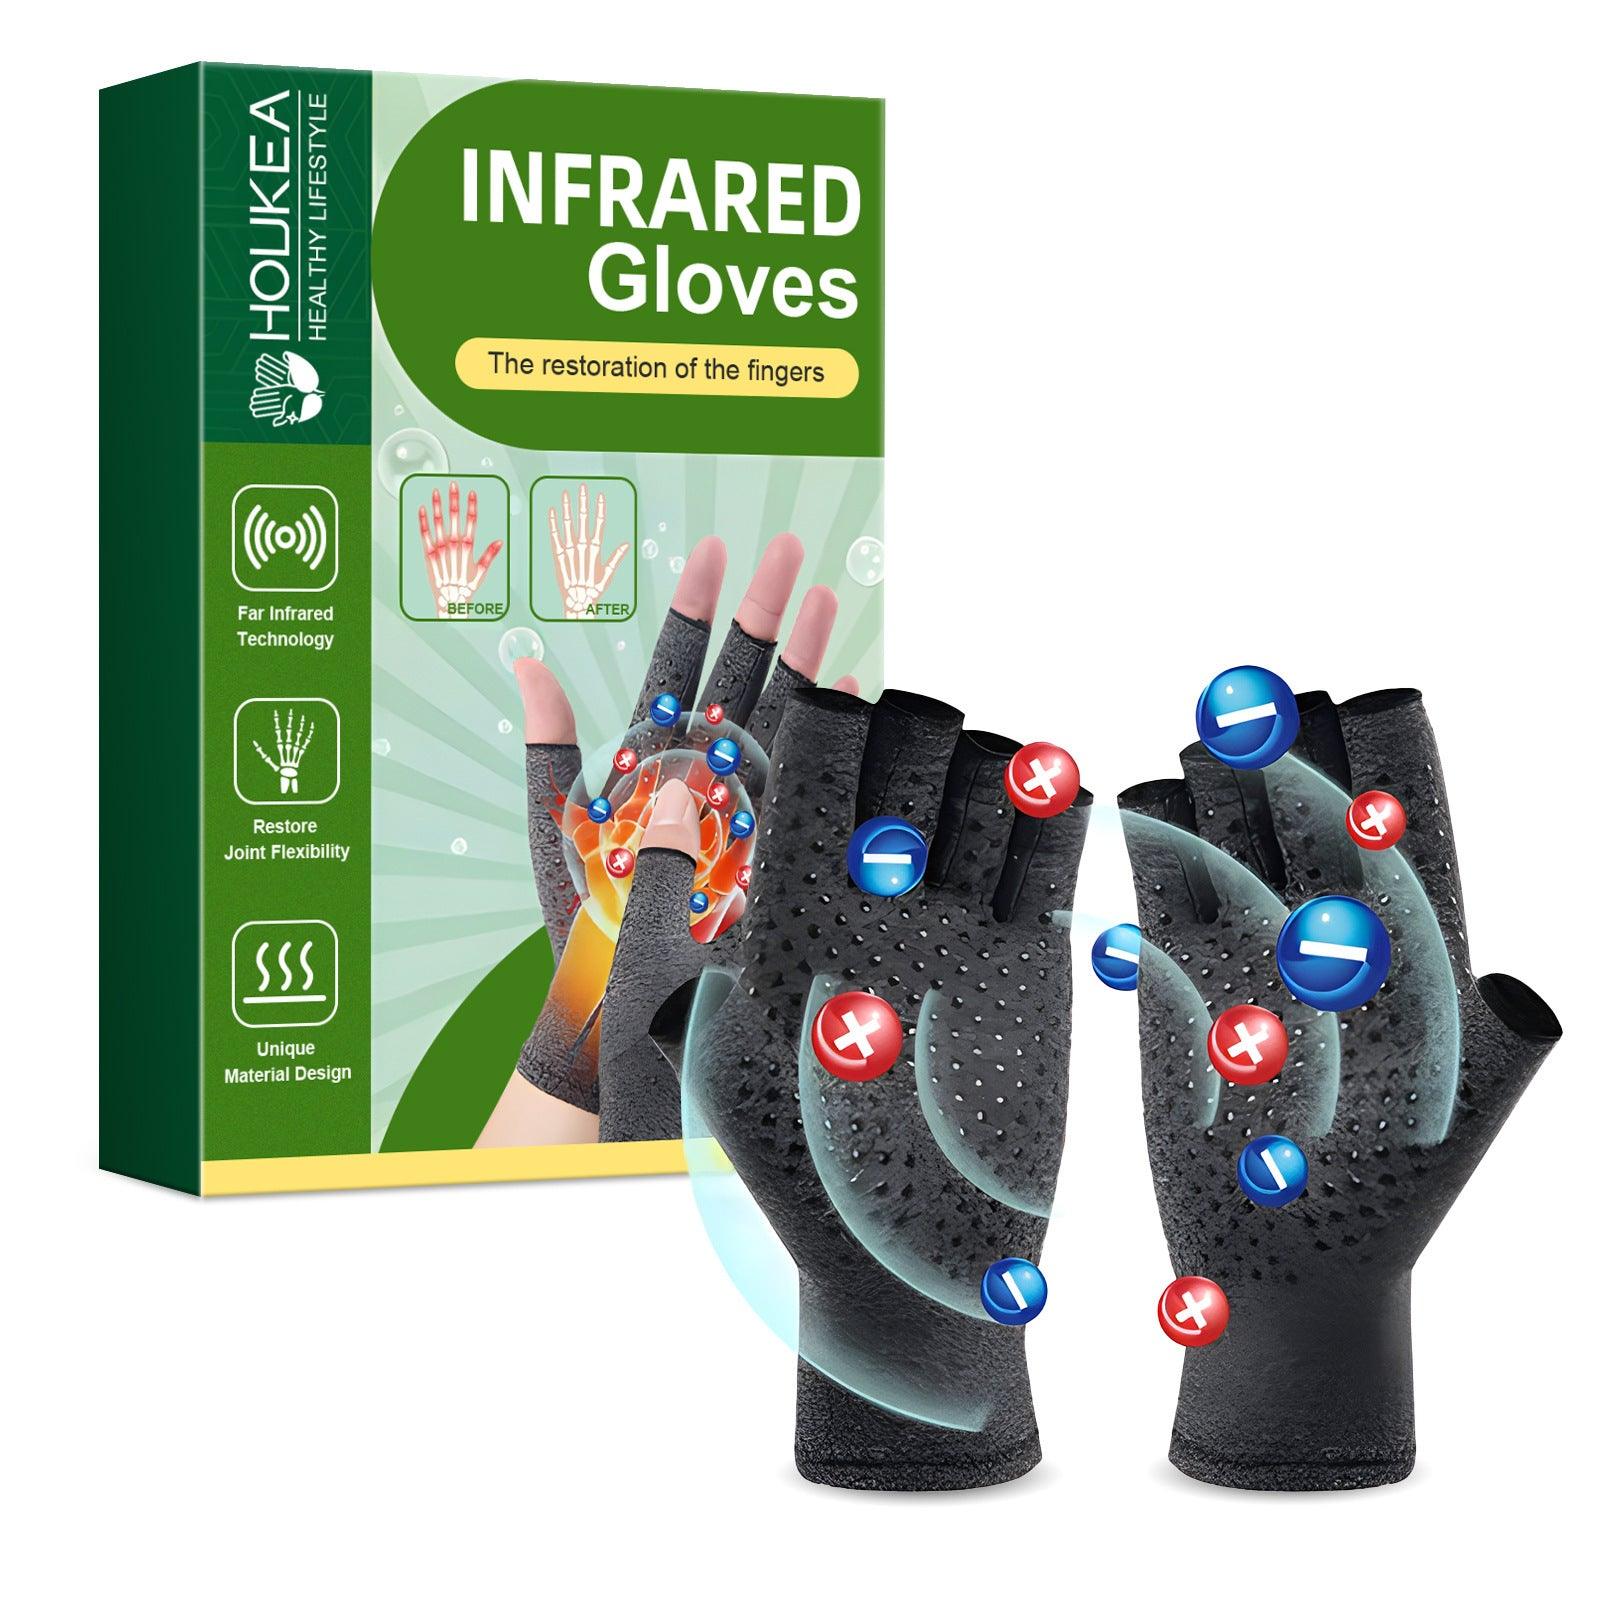 Sore Swelling Discomfort Nursing Gloves - Nioor